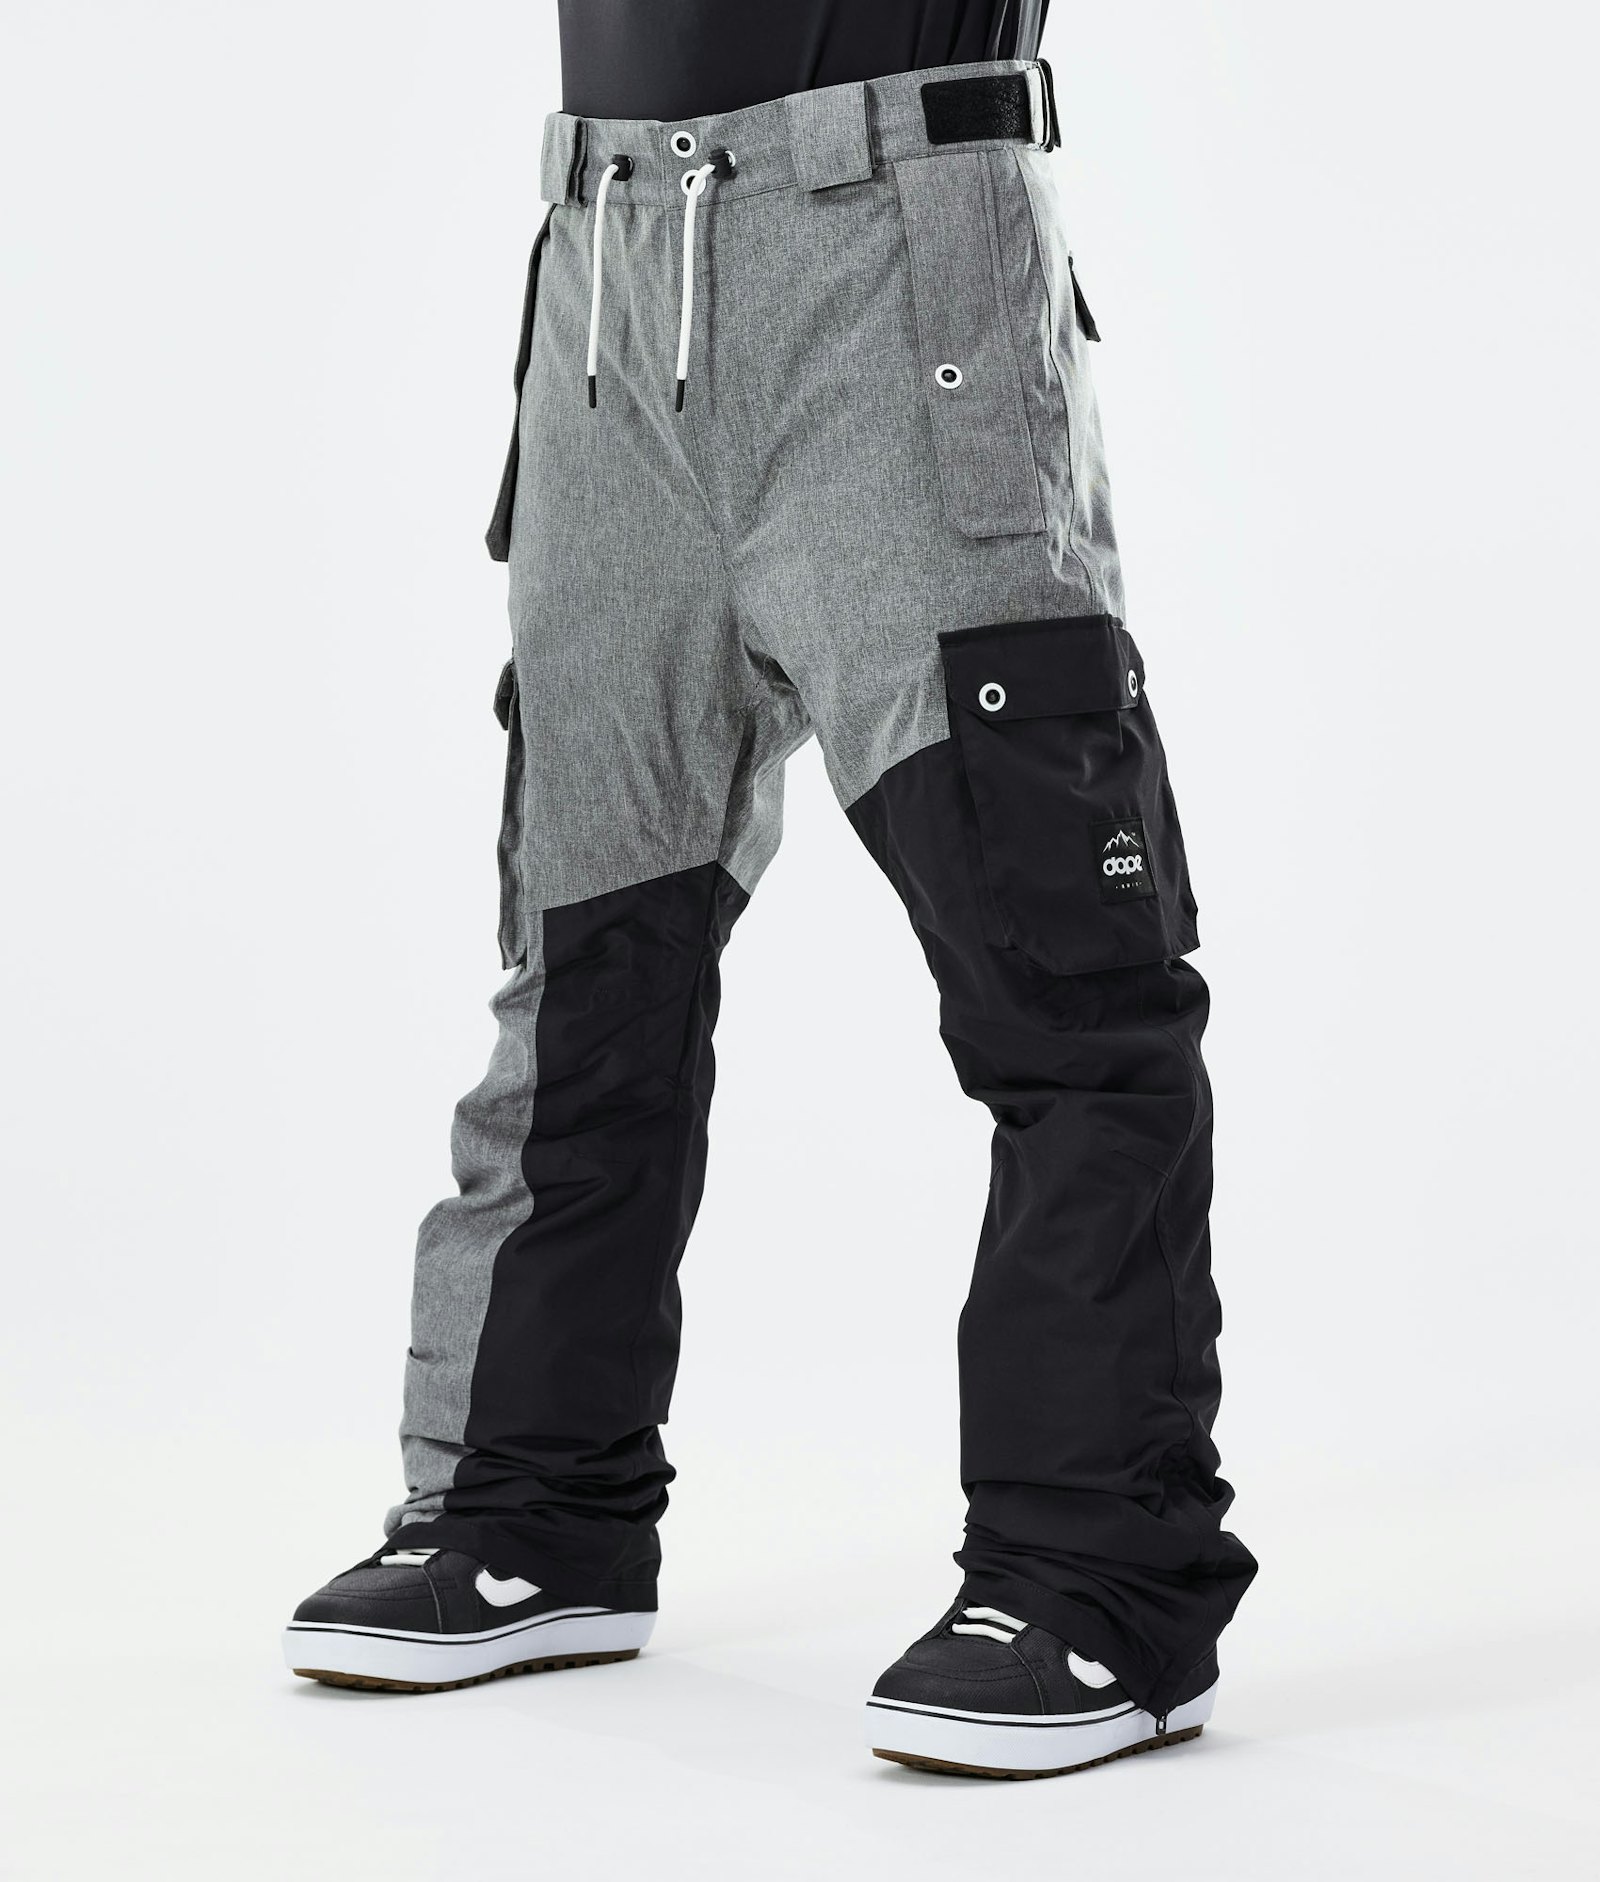 Adept 2020 Snowboard Pants Men Grey Melange/Black Renewed